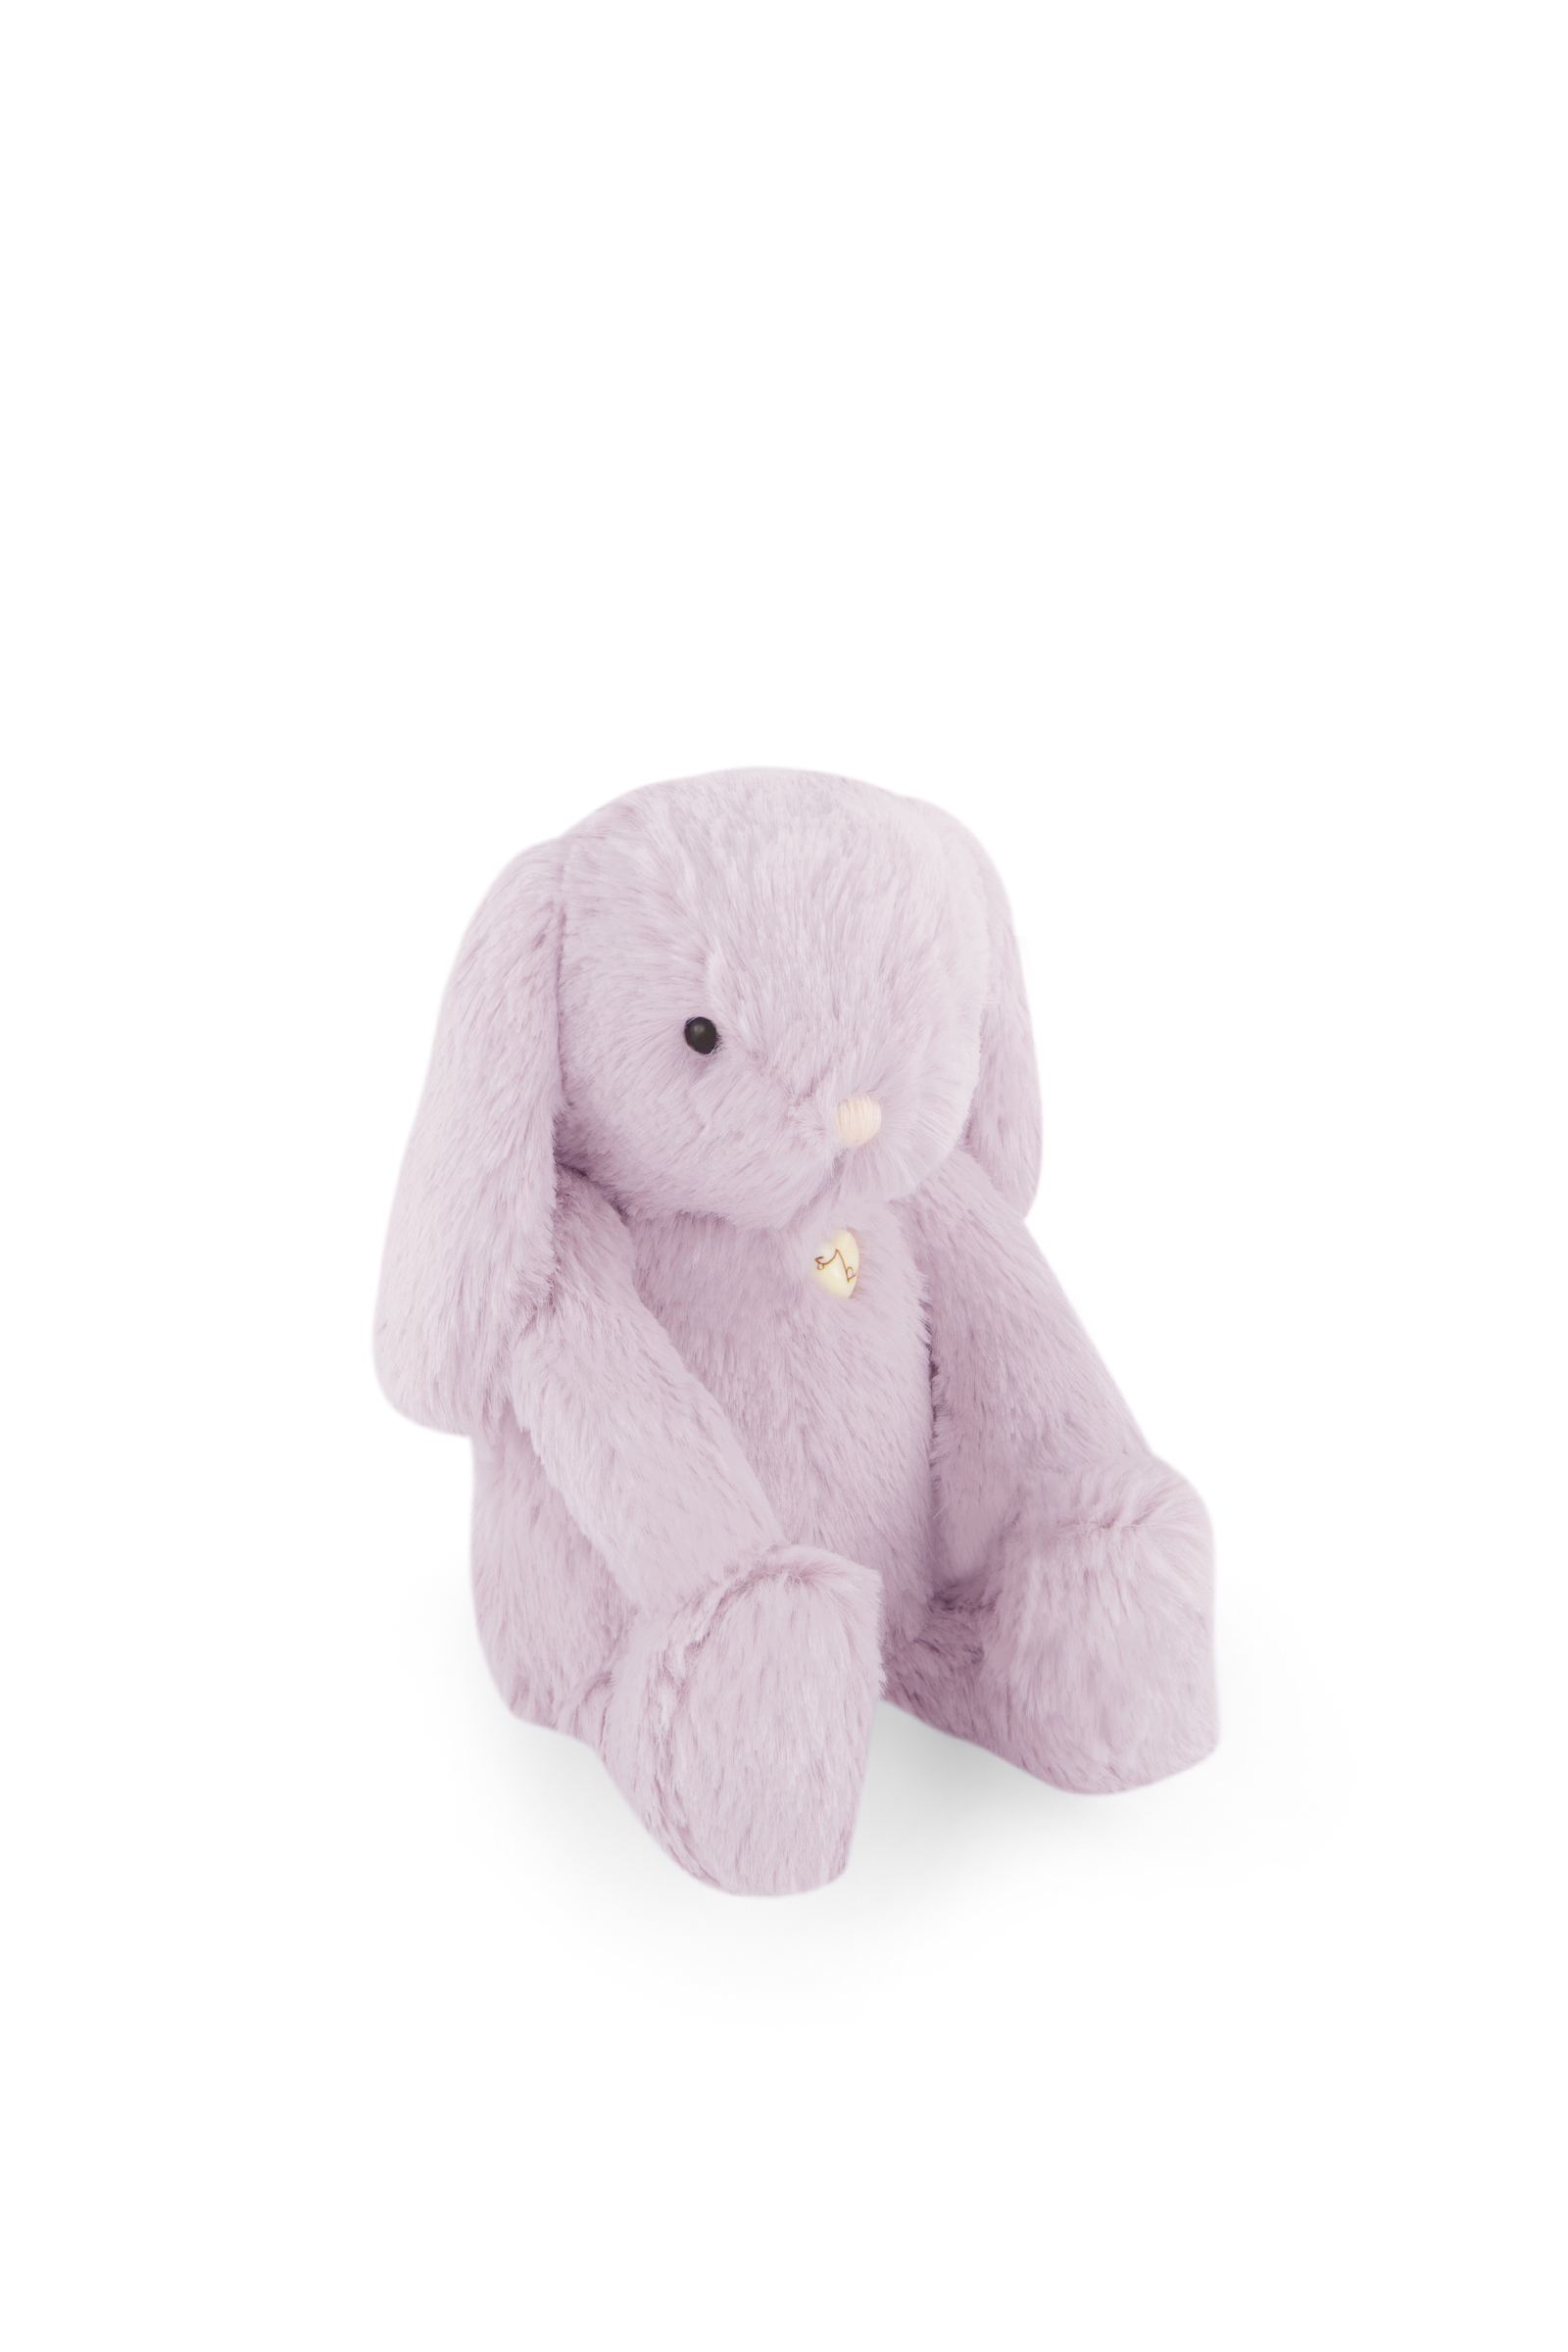 Snuggle Bunnies 20cm Penelope The Bunny - Violet Front_Side